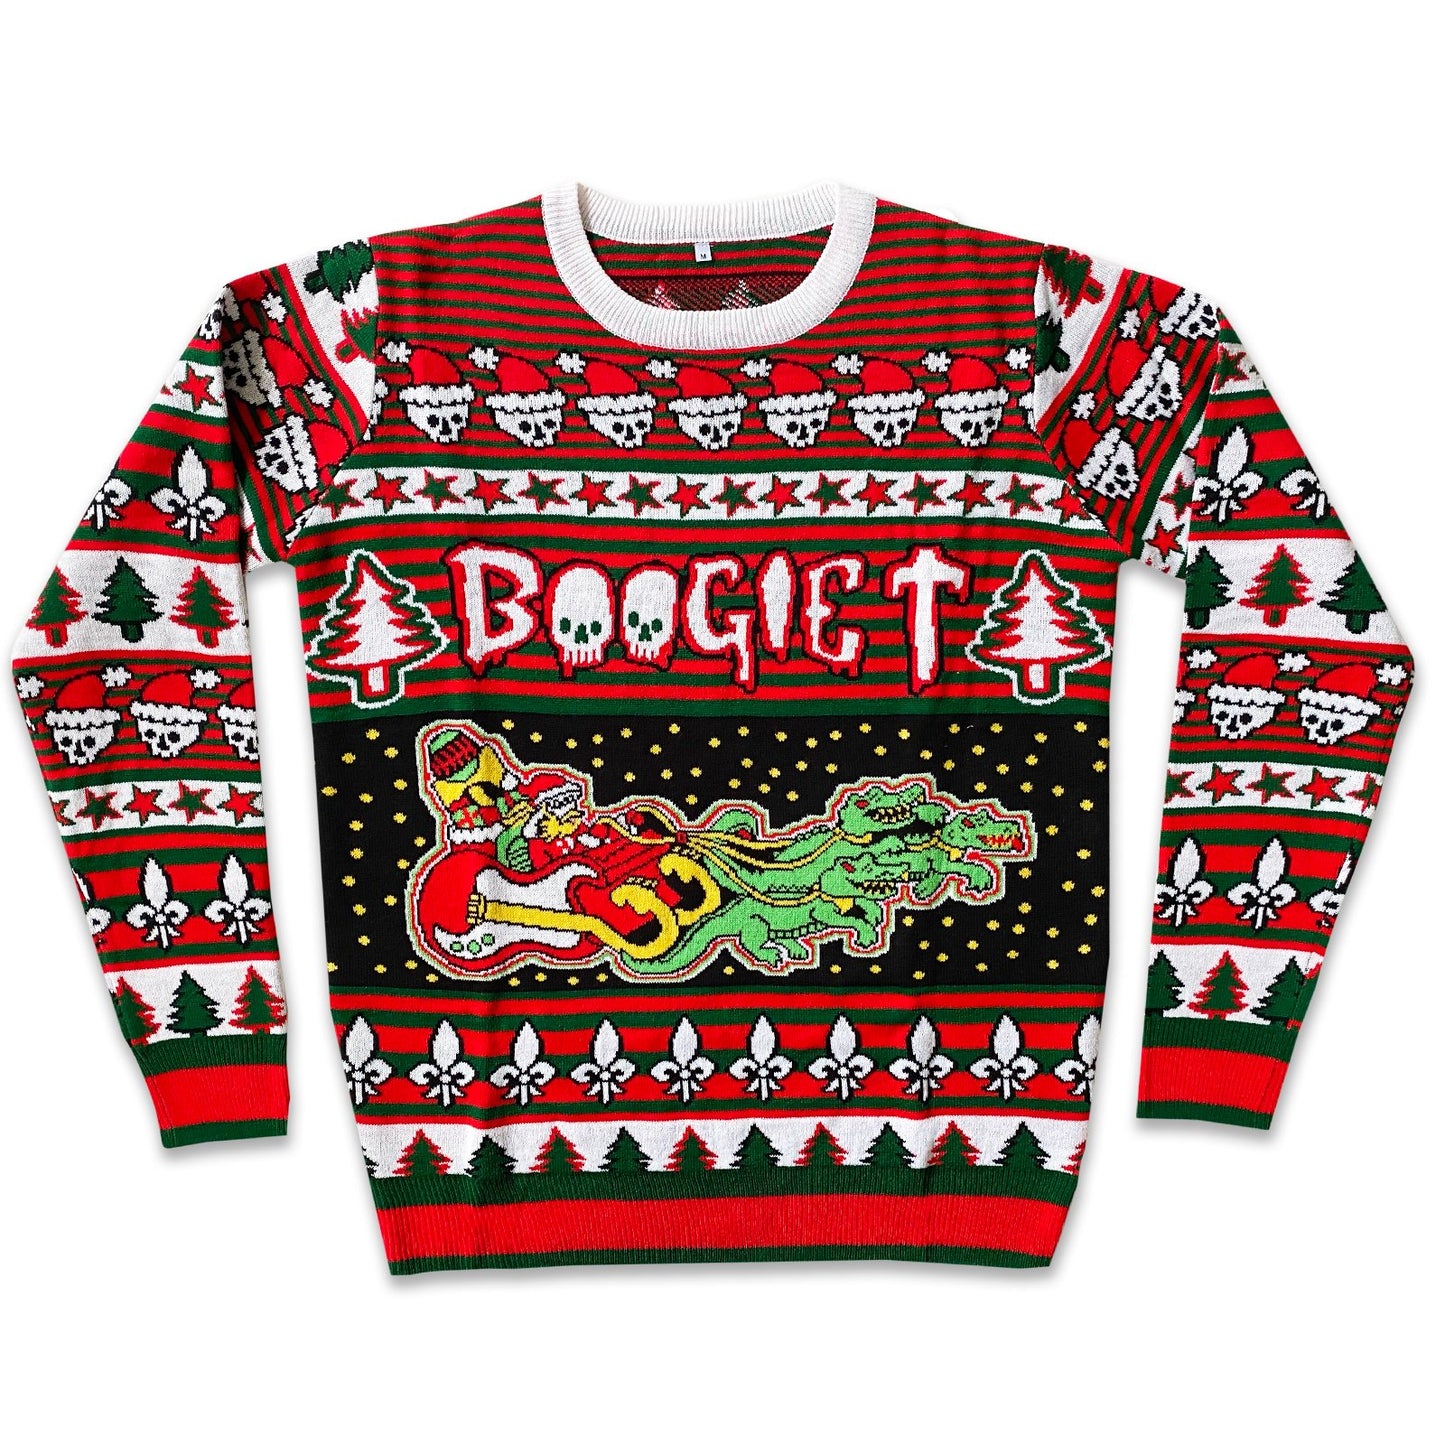 Boogie T - Cajun Santa - Custom Knit Holiday Sweater